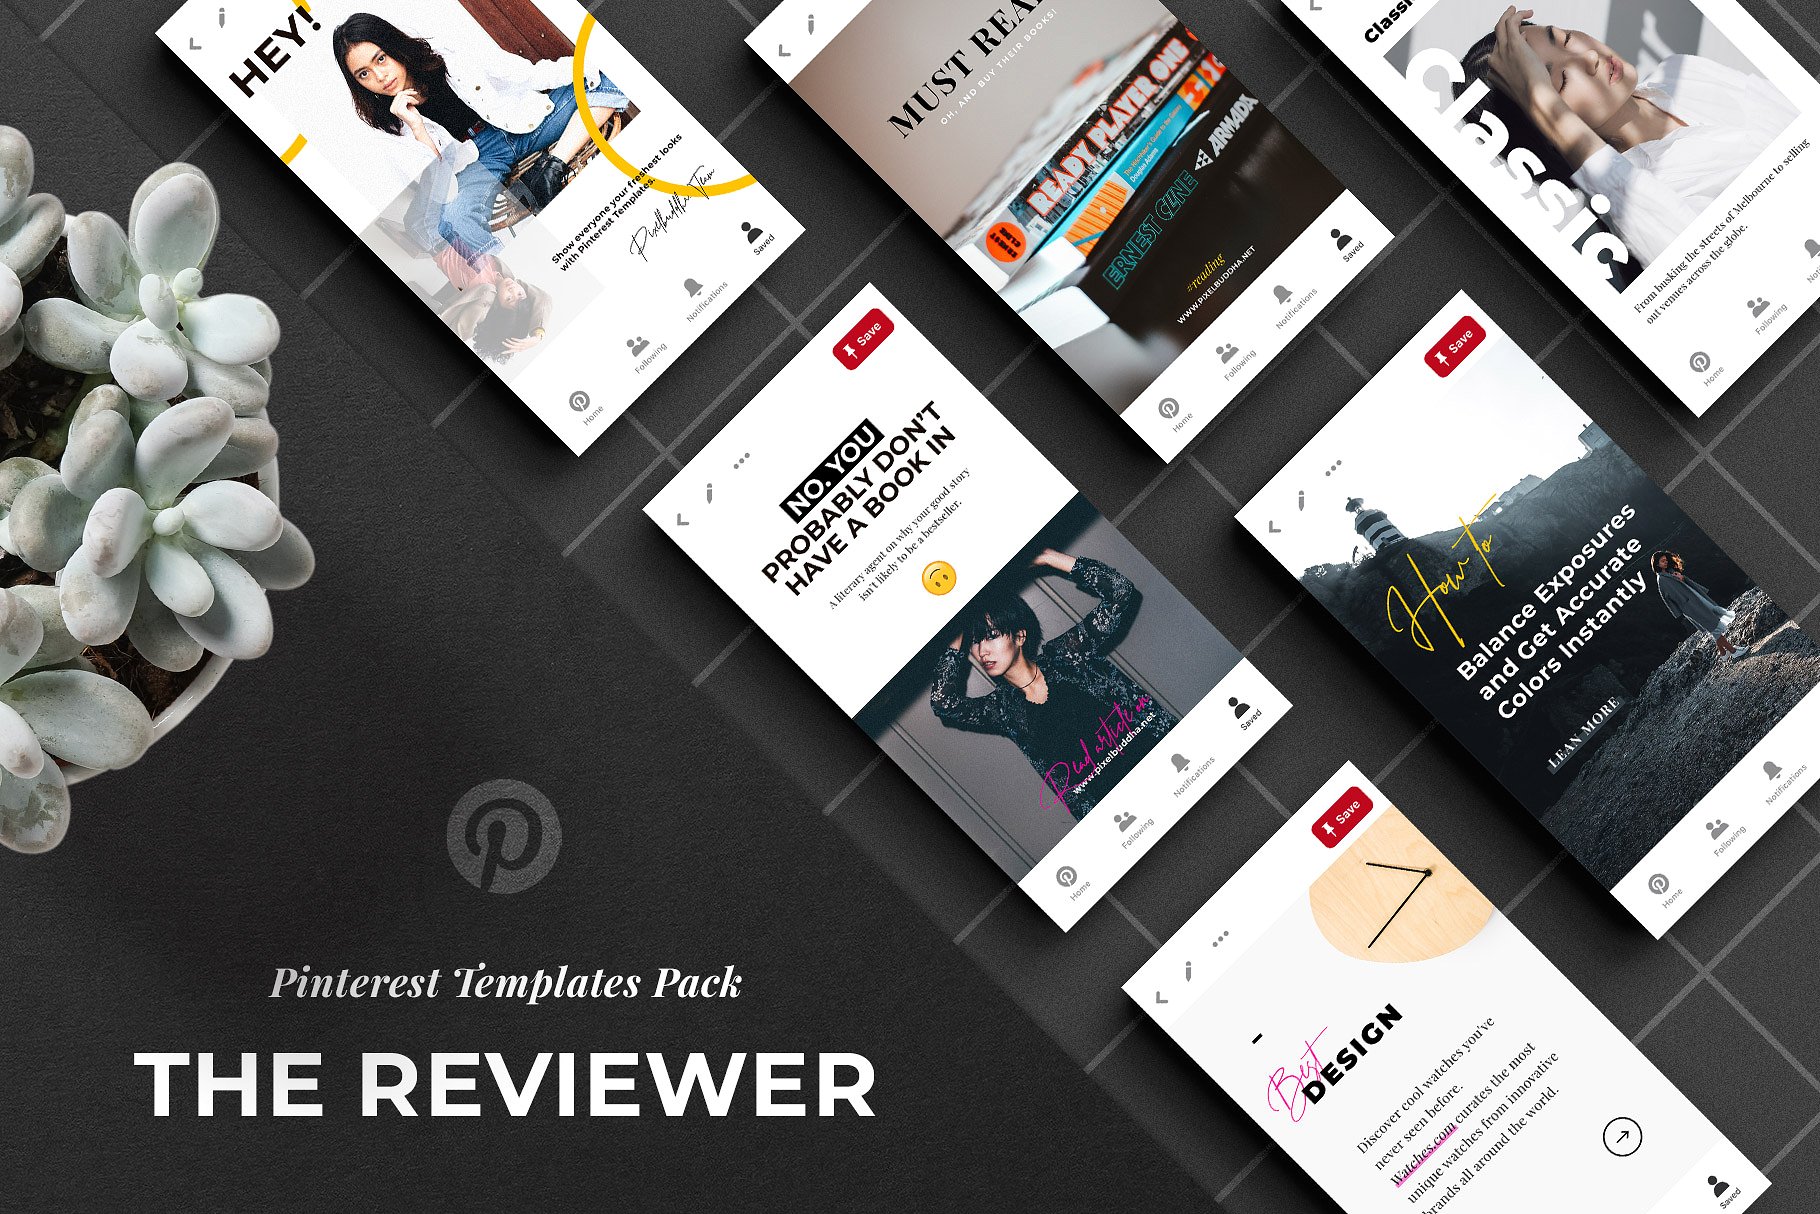 Pinterest品牌营销贴图PSD模板素材库精选 The Reviewer Pinterest Templates Set插图